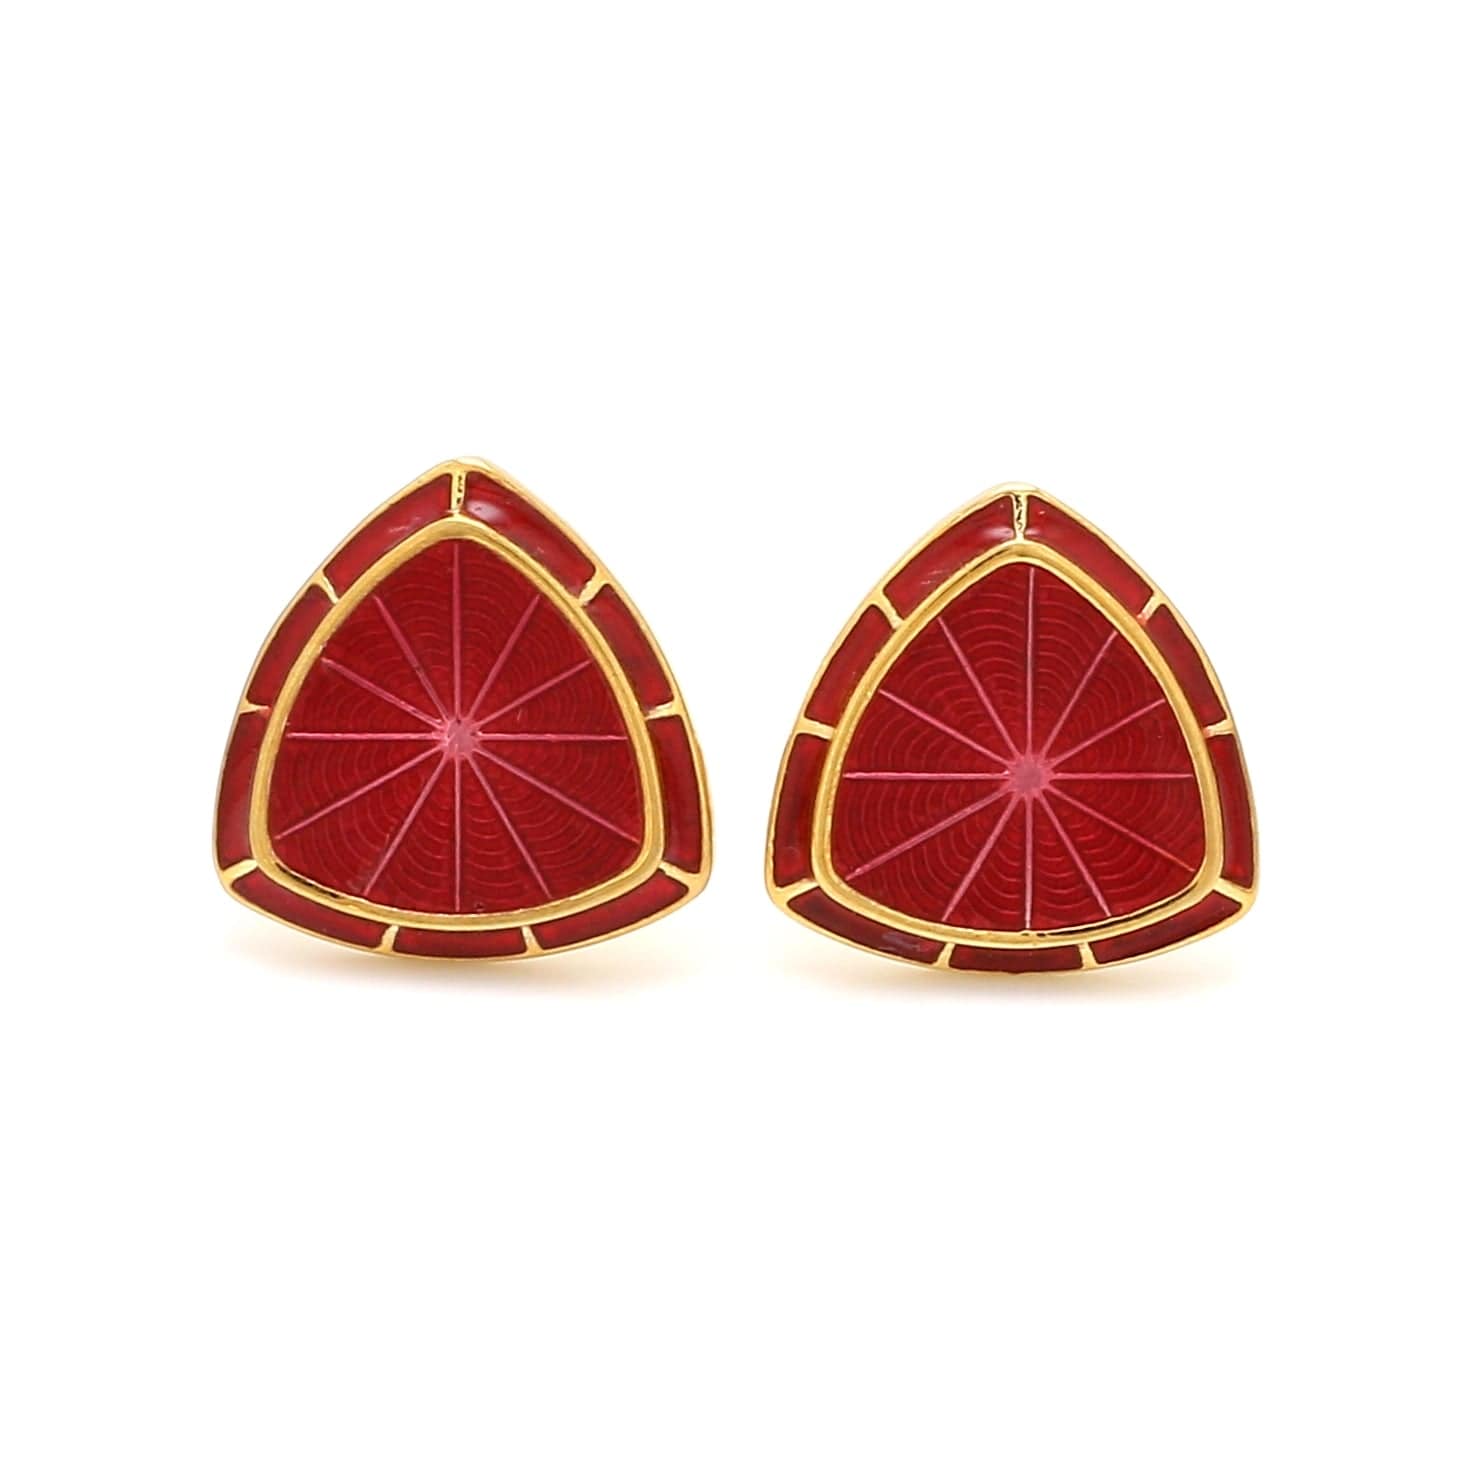 northstarshop Red Zircon Stone Biker Gothic Men's Steel Earrings Pair